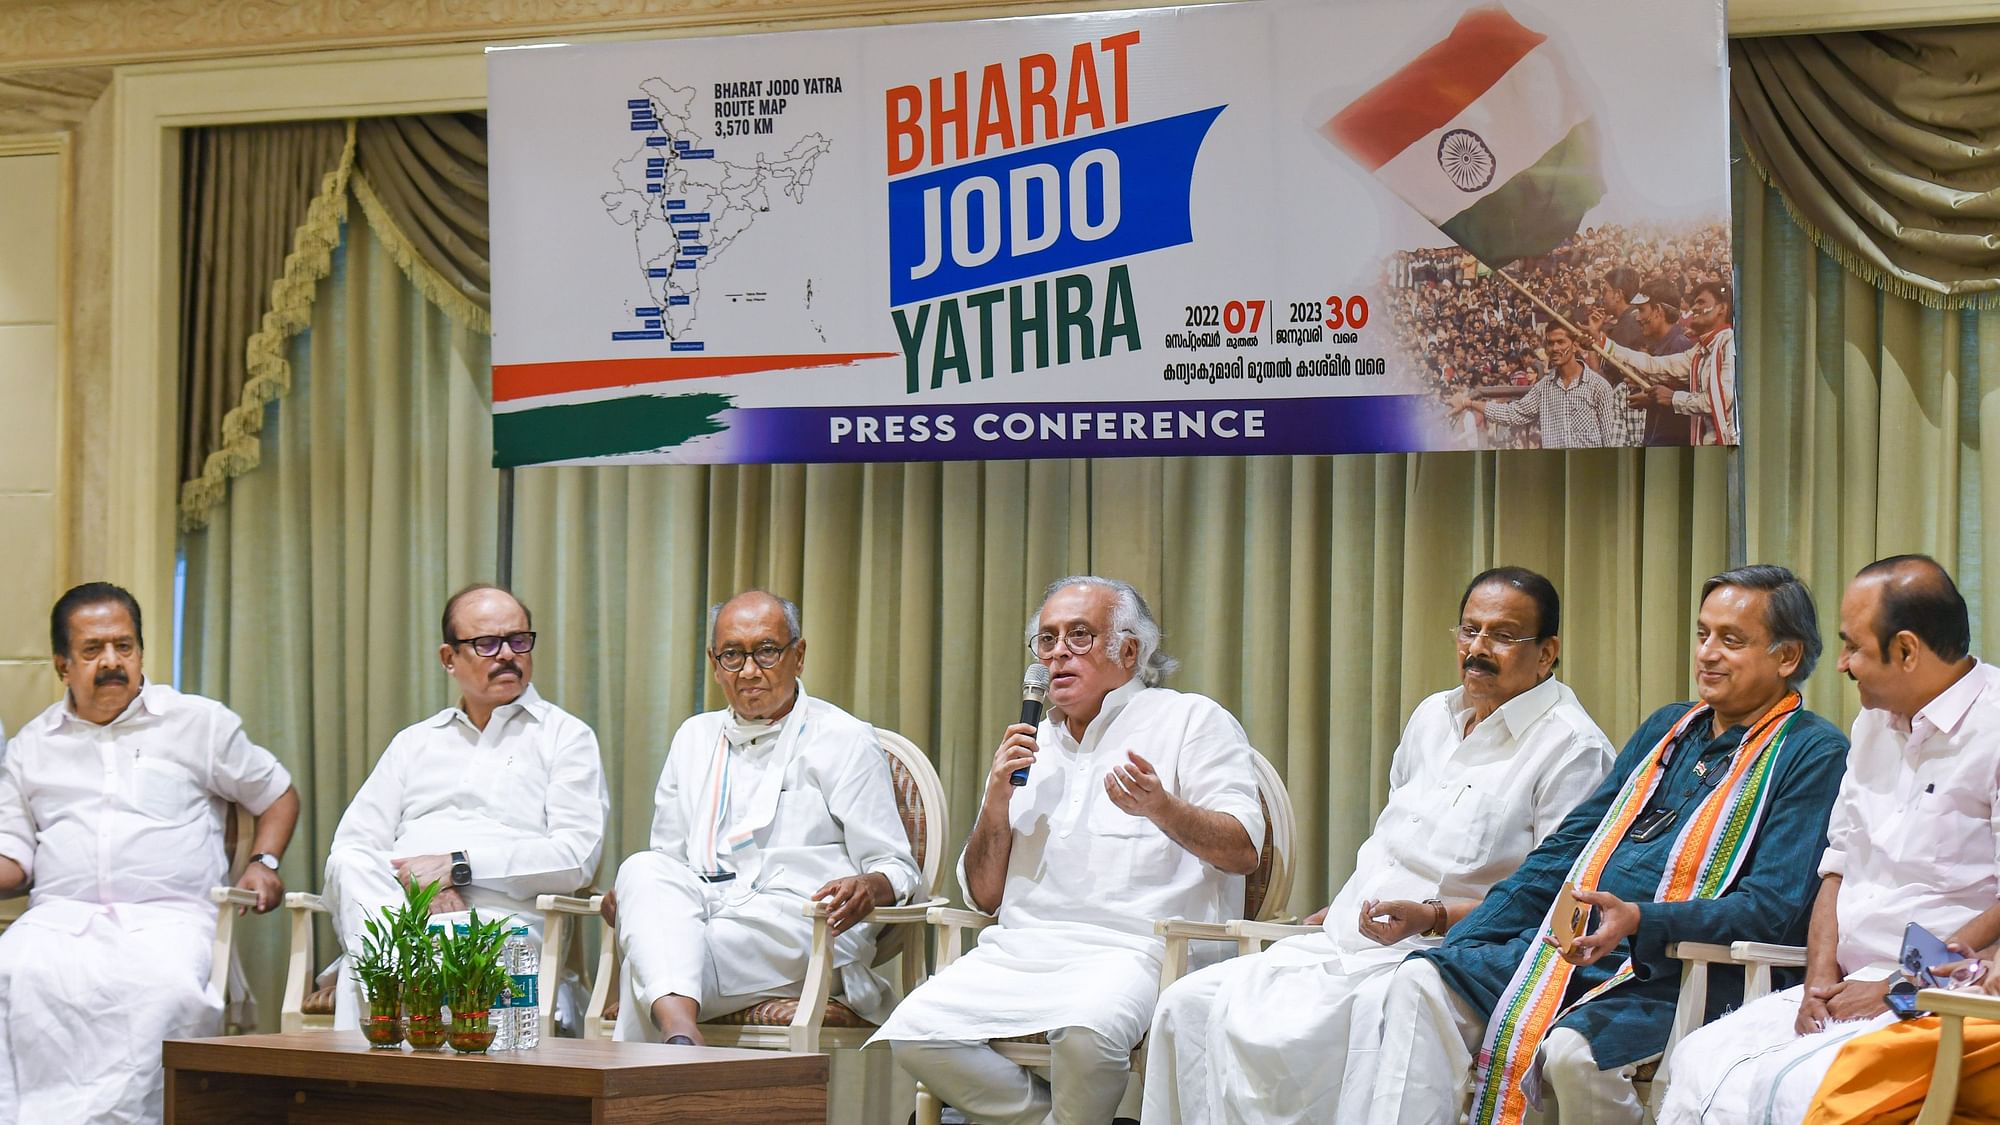 <div class="paragraphs"><p>Senior Congress leader Jairam Ramesh speaks during a press conference regarding partys Bharat Joda Yatra, in Thiruvananthapuram, Tuesday, Aug. 30, 2022. Congress leaders Digvijaya Singh, Shashi Tharoor and others are also seen. </p></div>